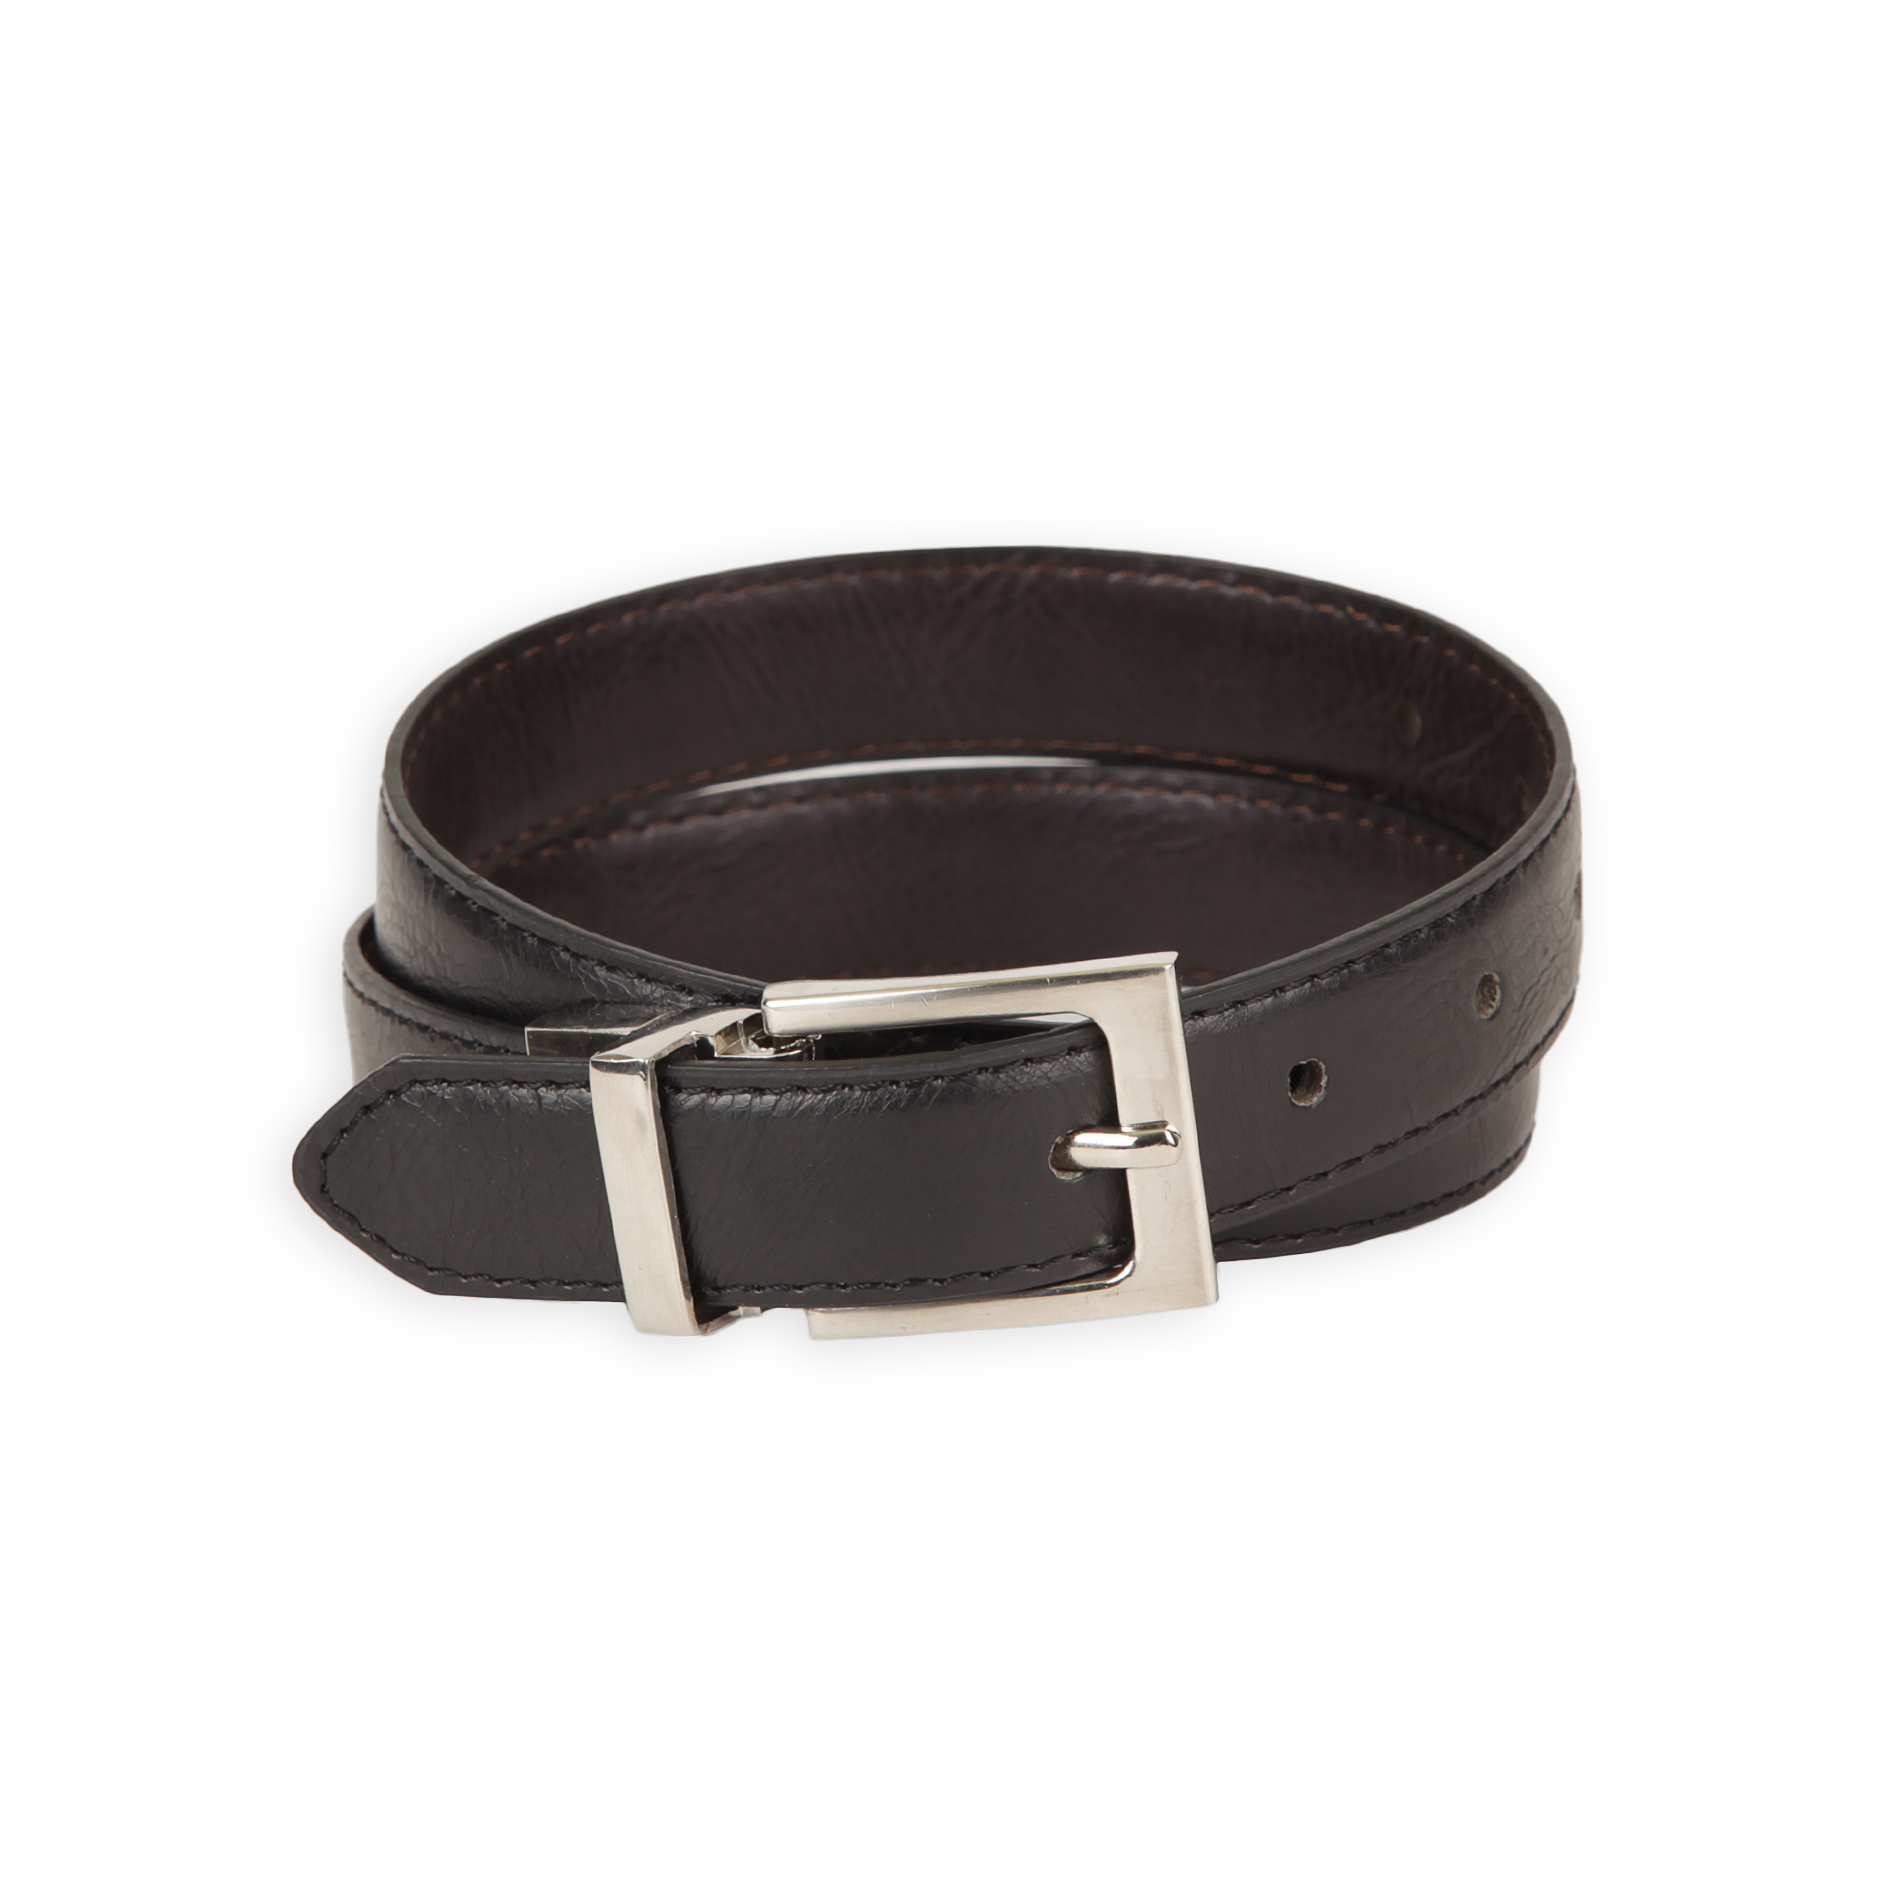 Basic Editions Boy's Reversible Leather Belt